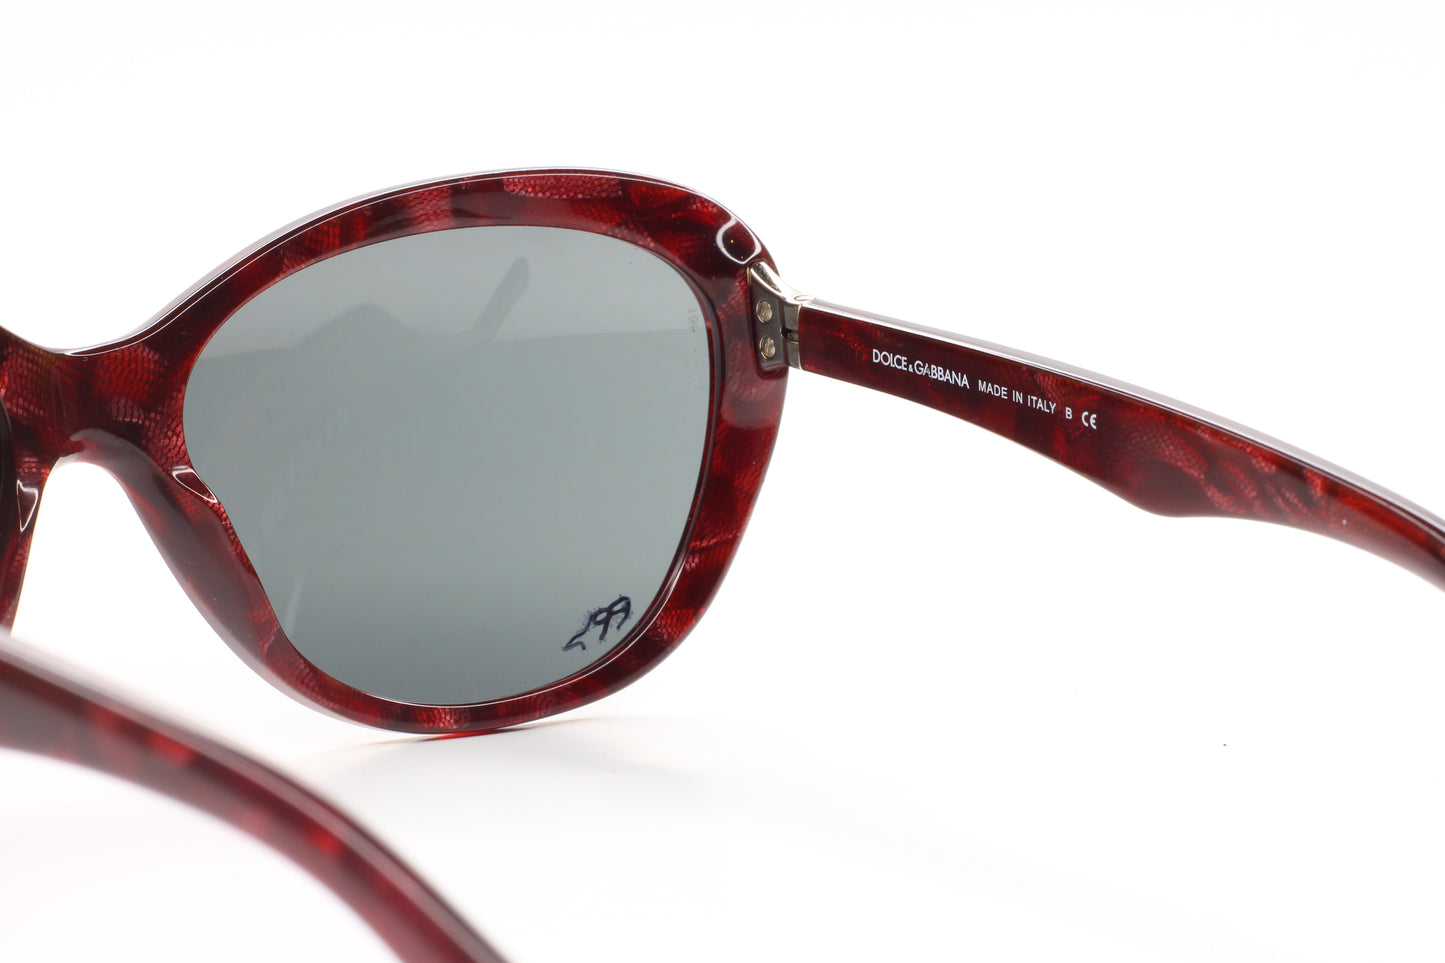 Dolce & Gabbana DG4150 2591/87 Maroon Luxury Sunglasses